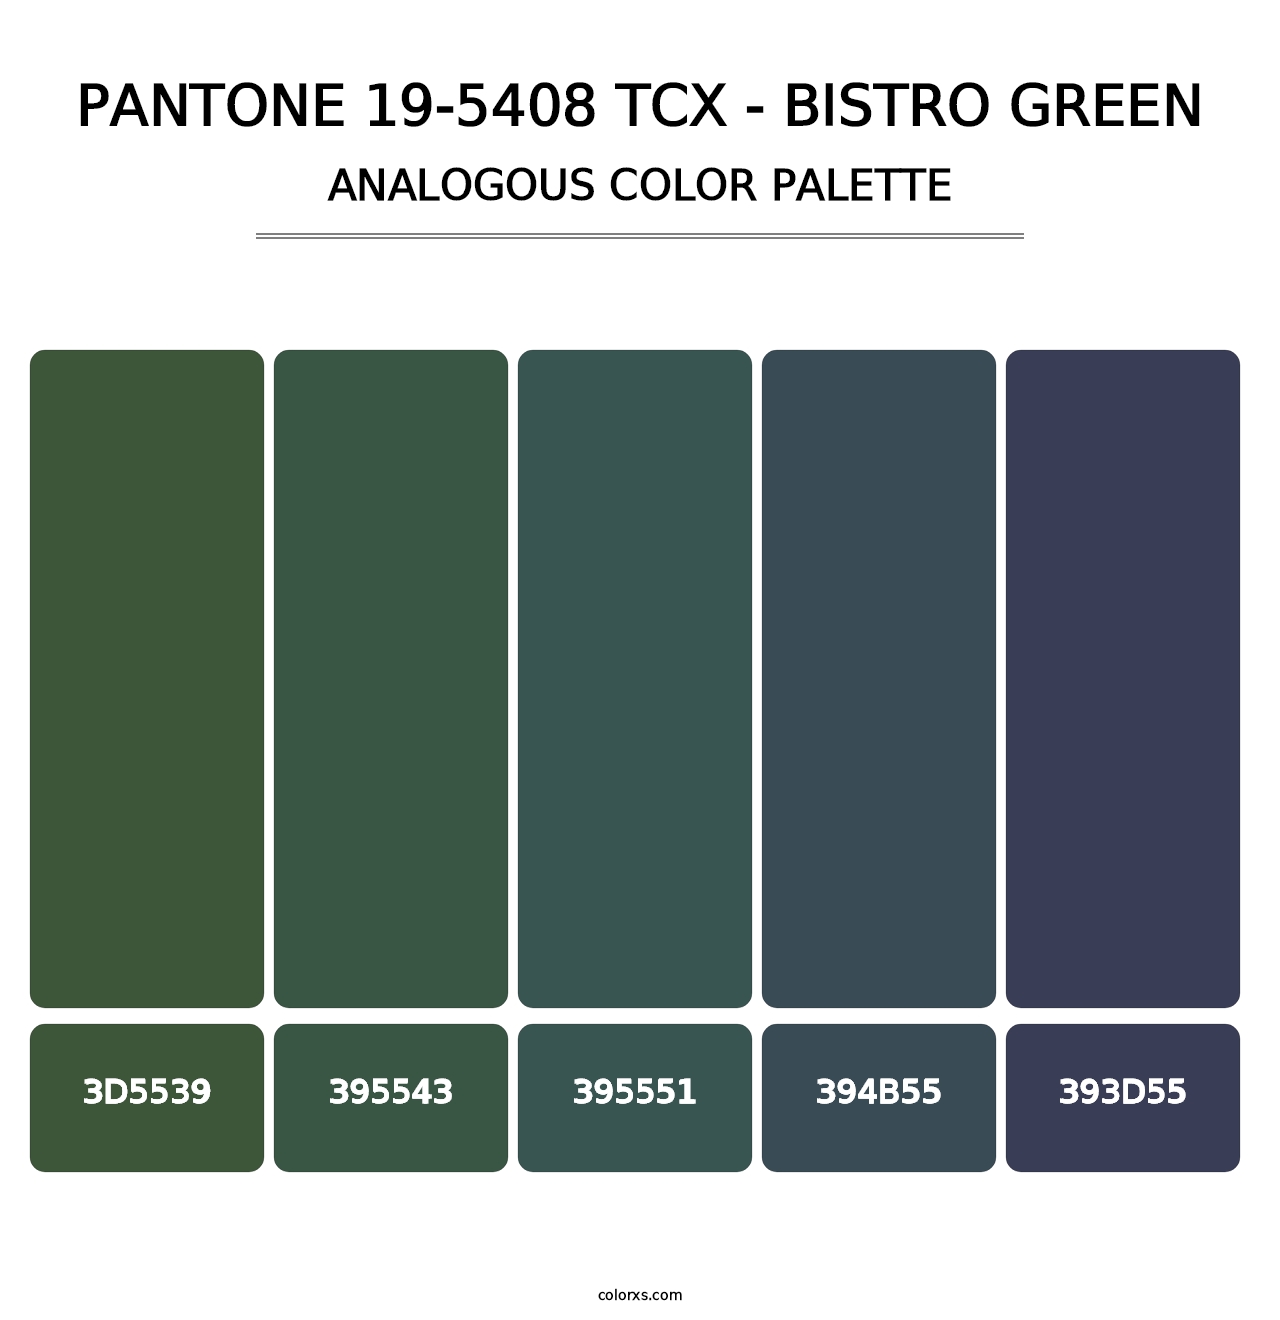 PANTONE 19-5408 TCX - Bistro Green - Analogous Color Palette